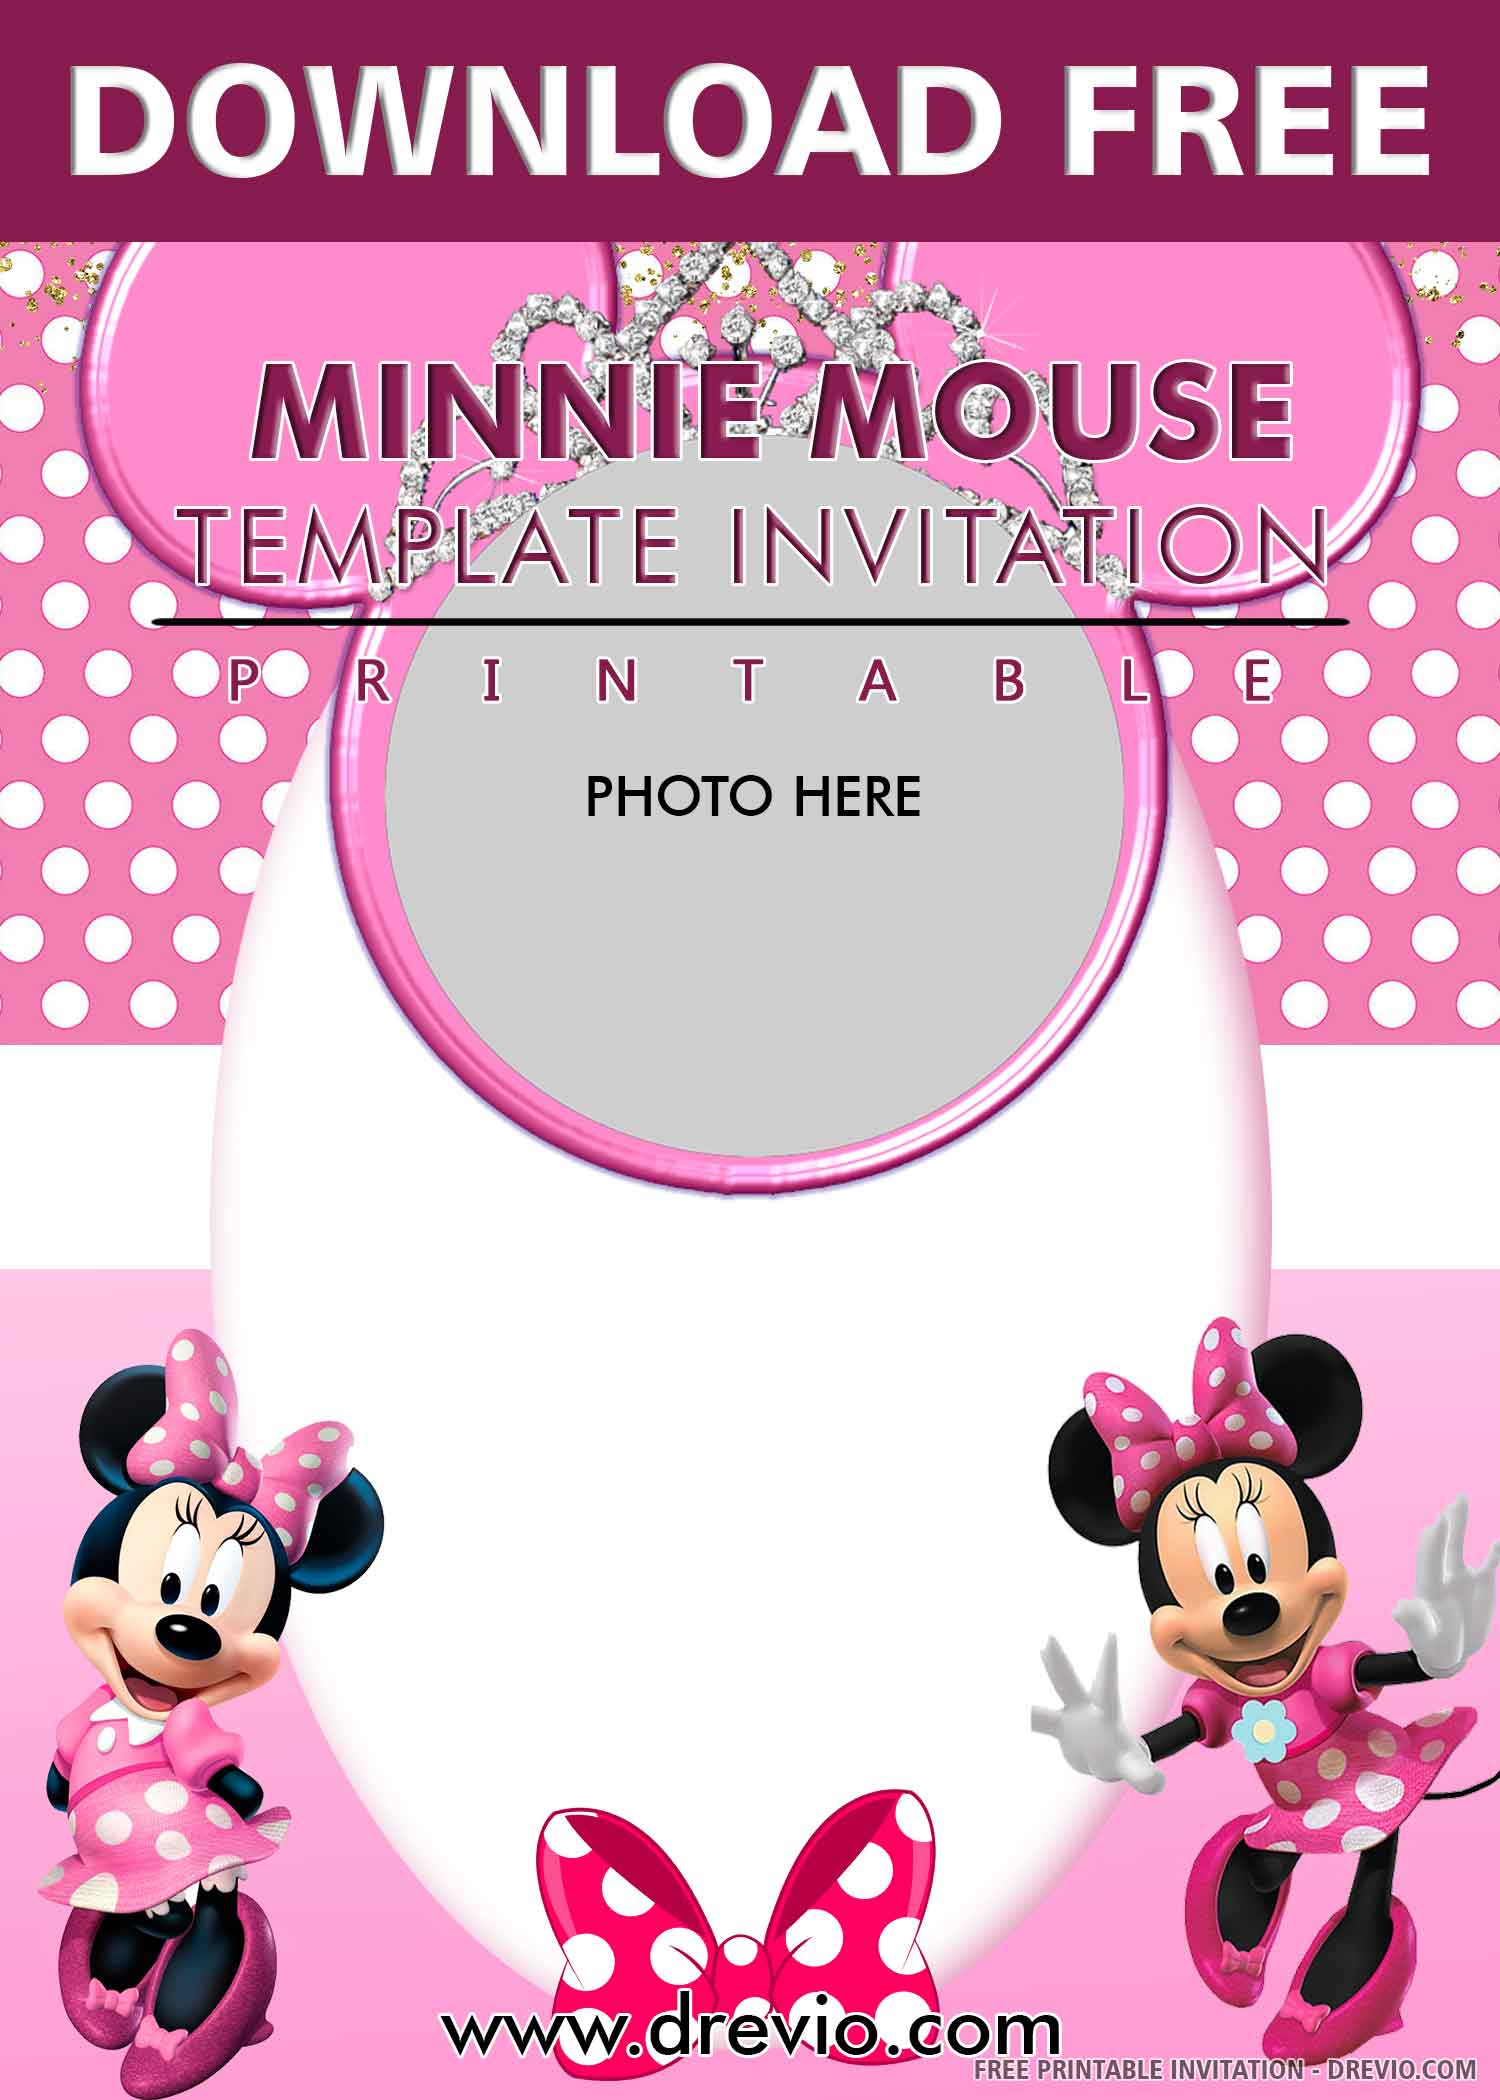  FREE PRINTABLE Minnie Mouse s Pink Bandana Birthday Invitation 